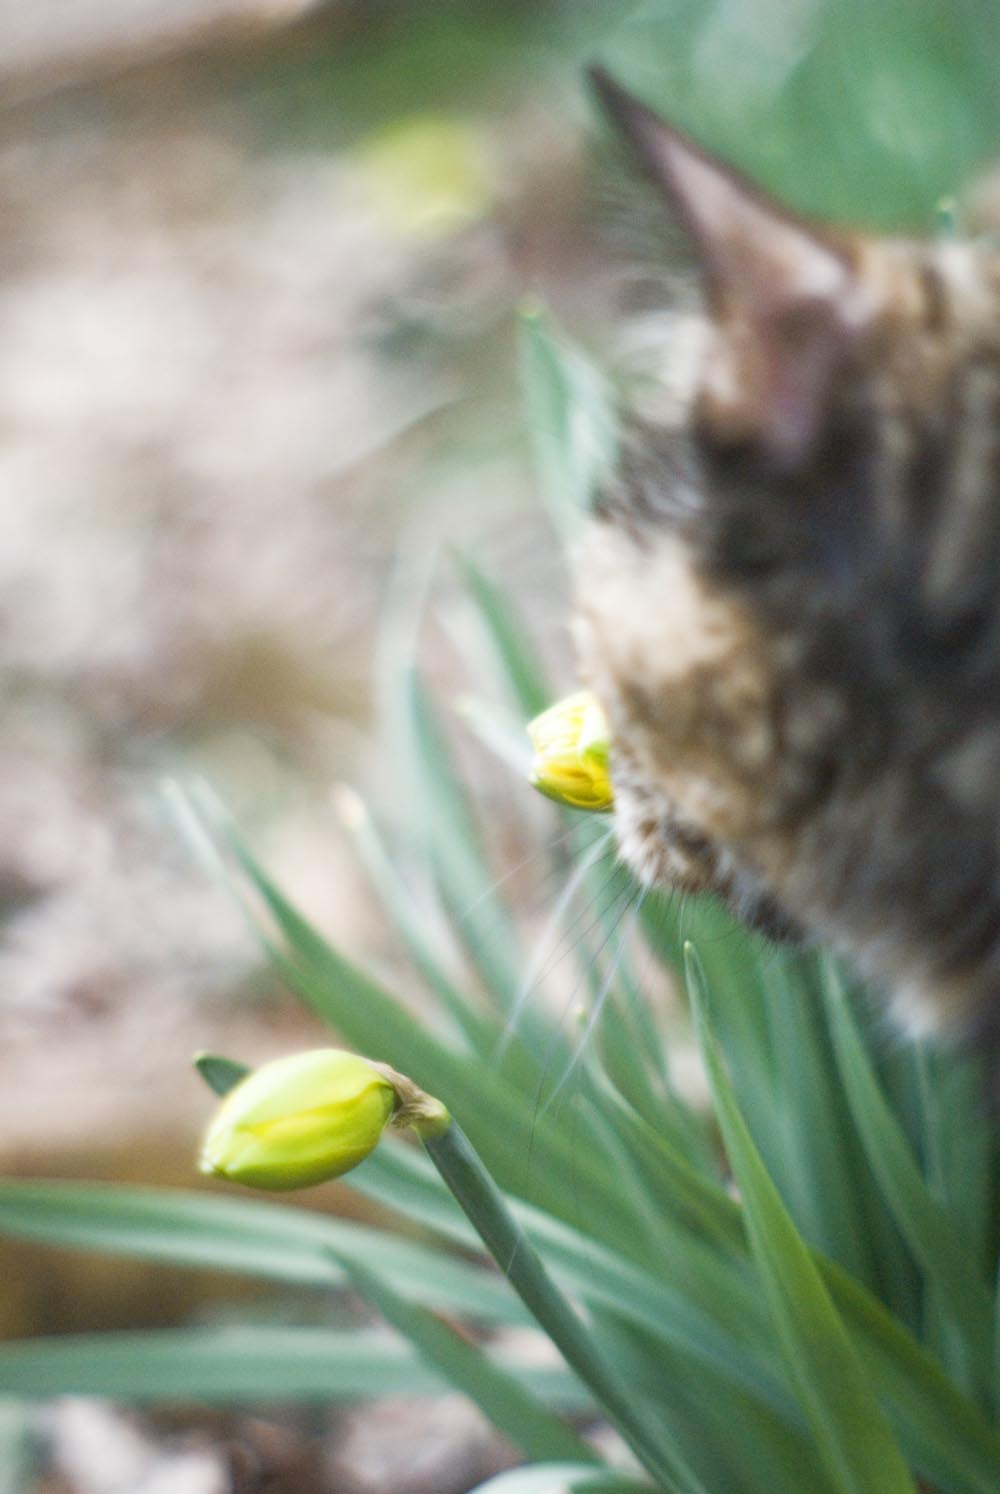 tortoiseshell cat with daffodils